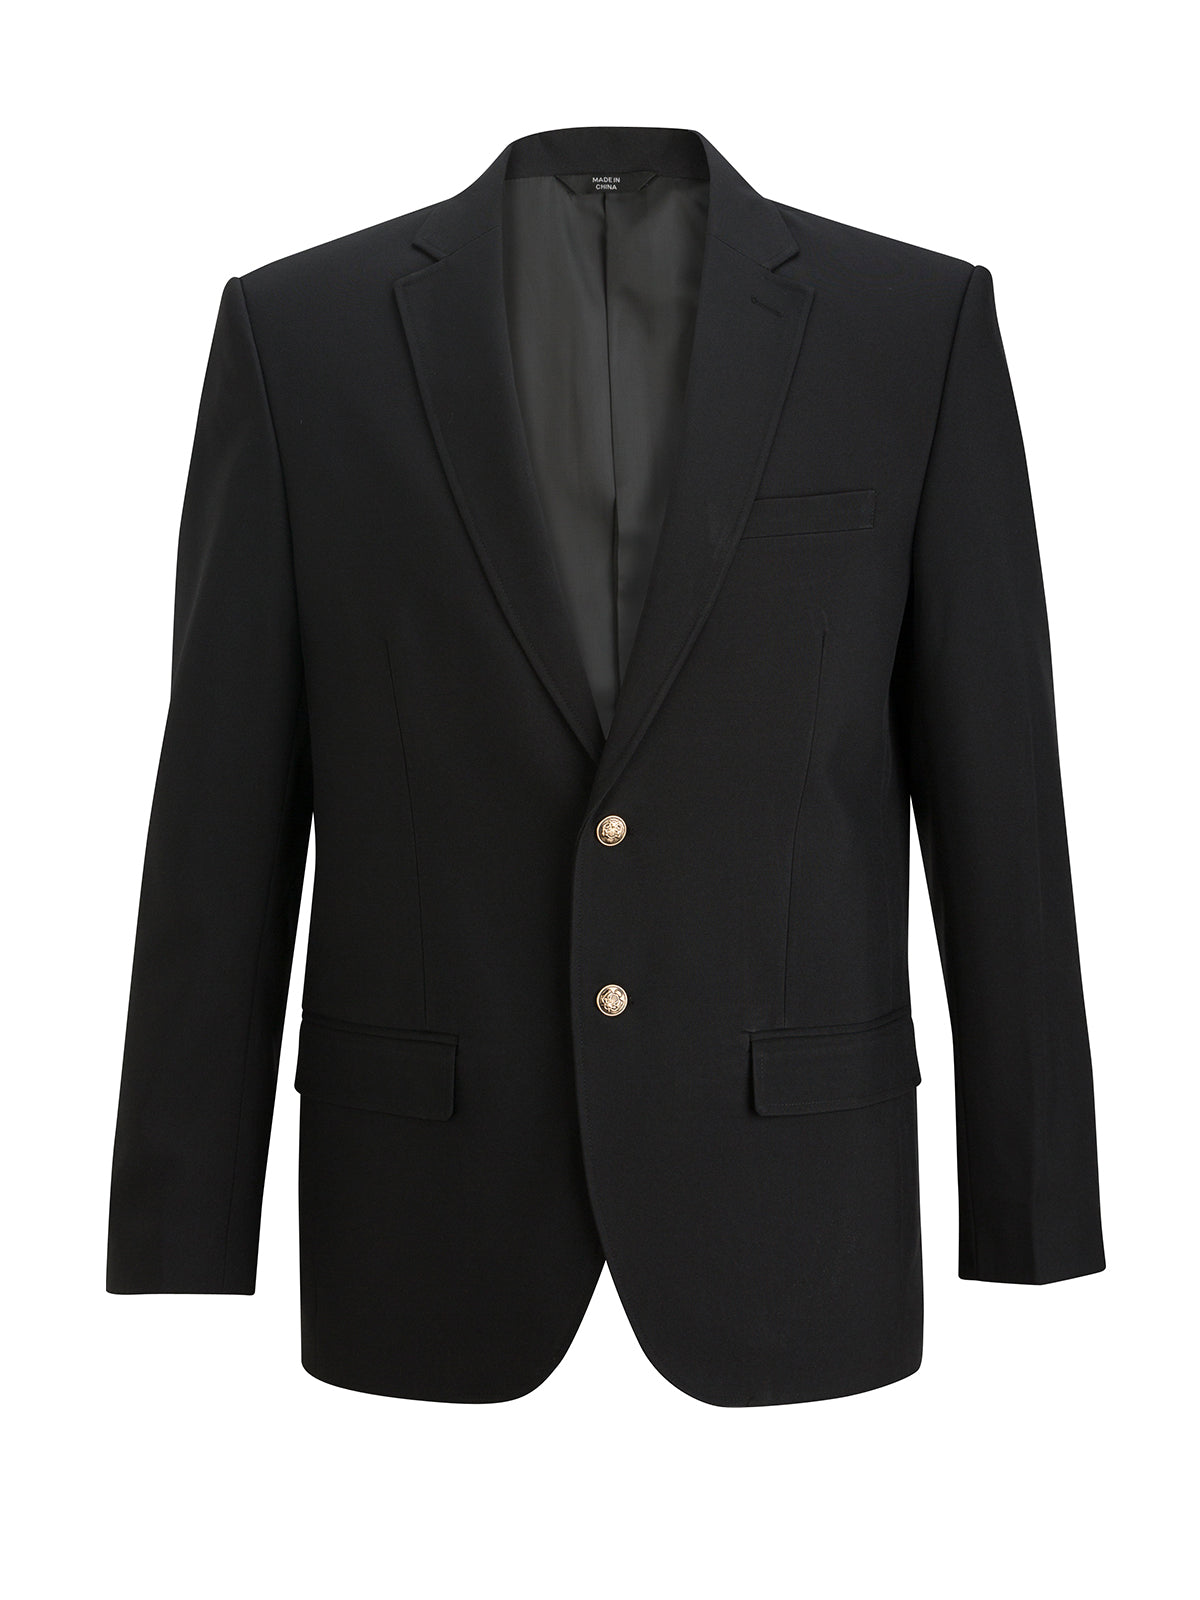 Men's Essential Jacket - 3505 - Black